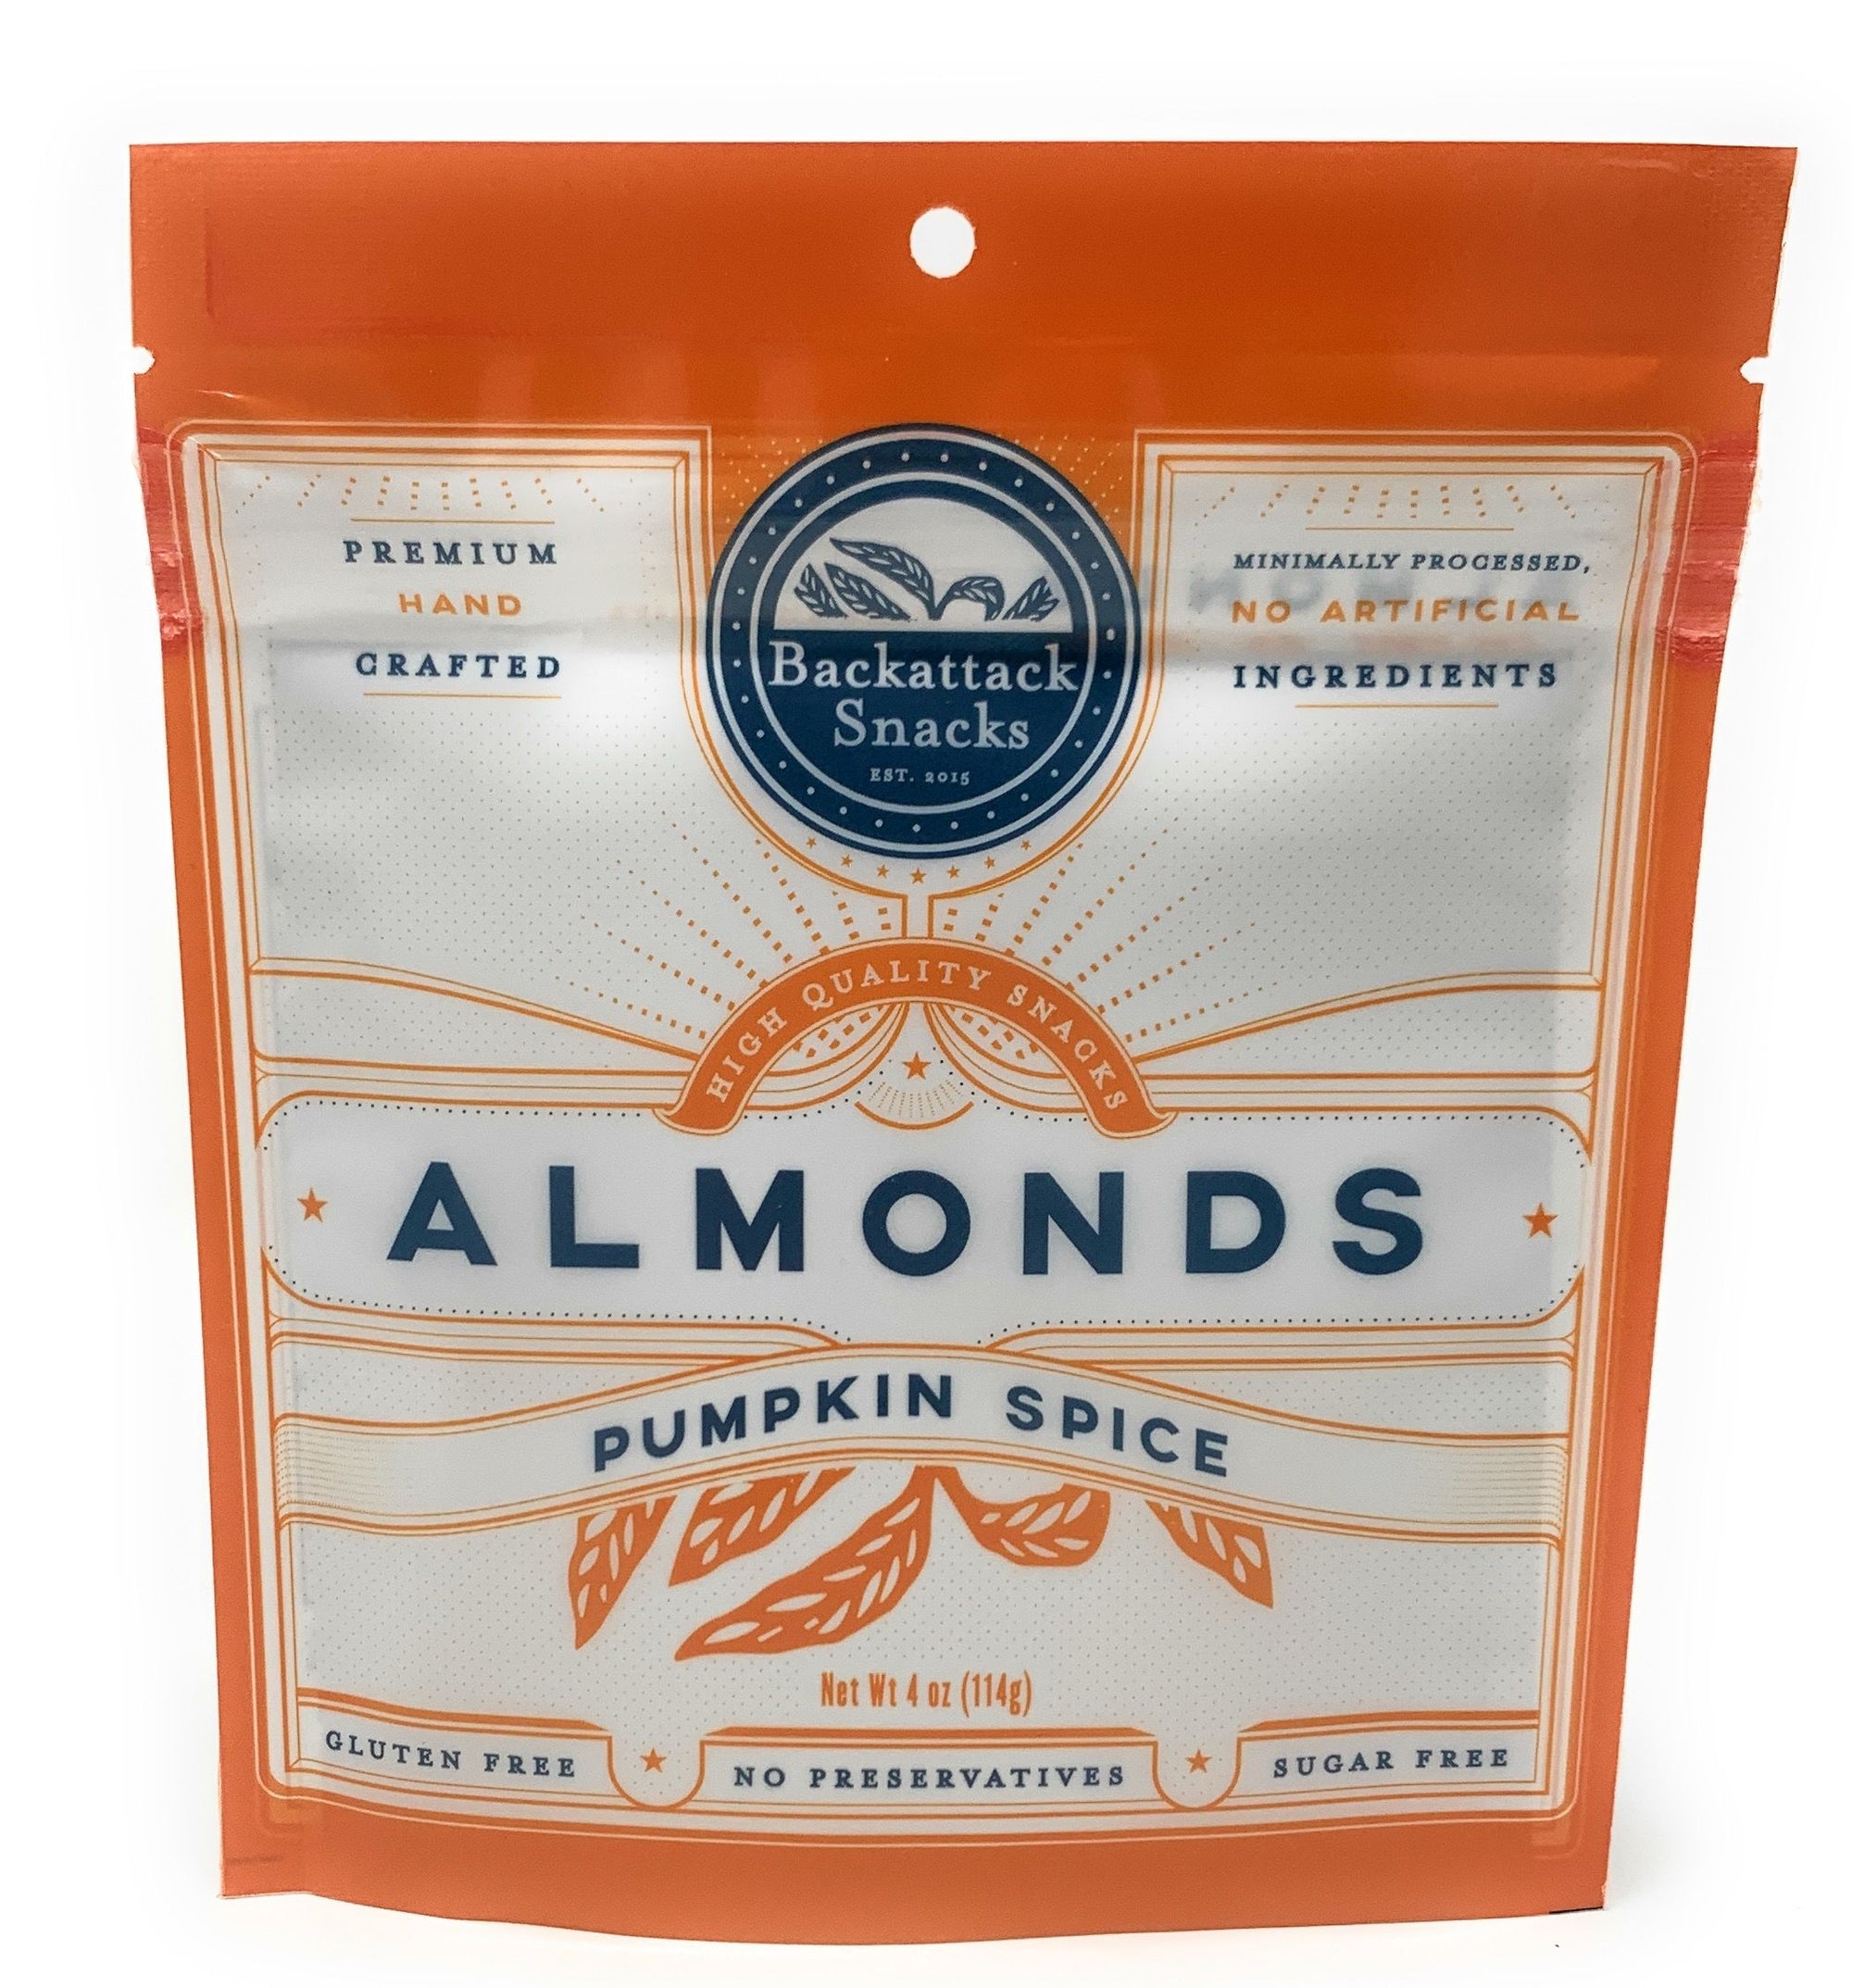 Wholesale Case of 4oz Pumpkin Spice Almonds - Backattack Snacks 